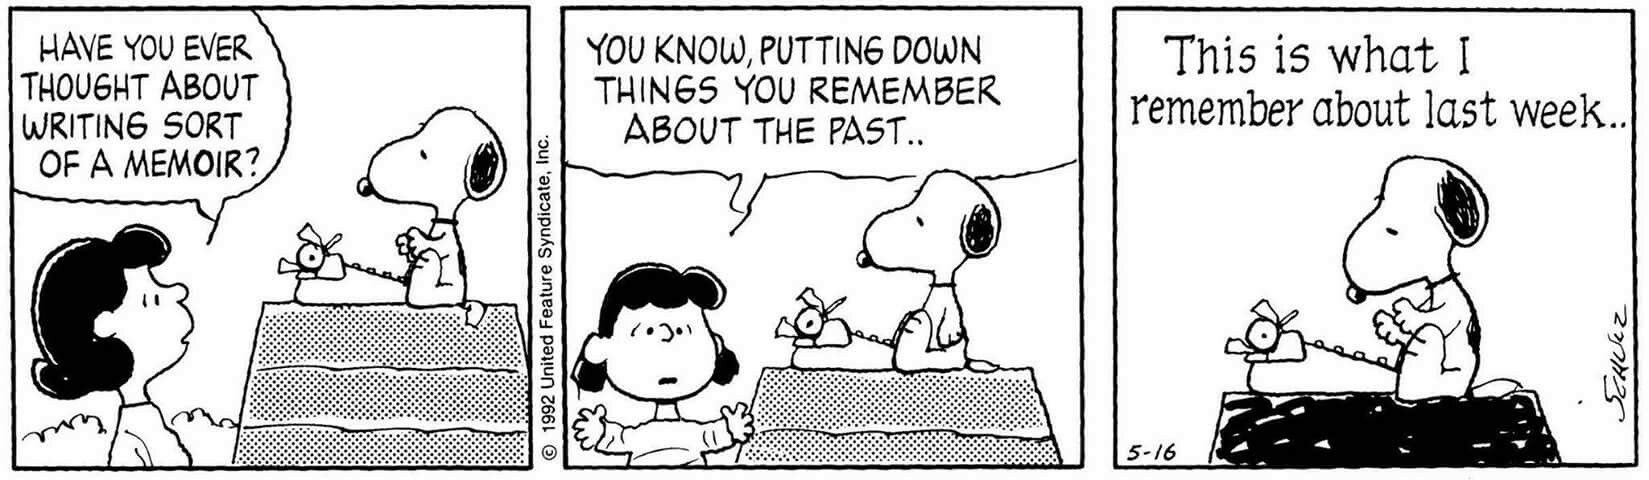 Snoopy writing a memoir